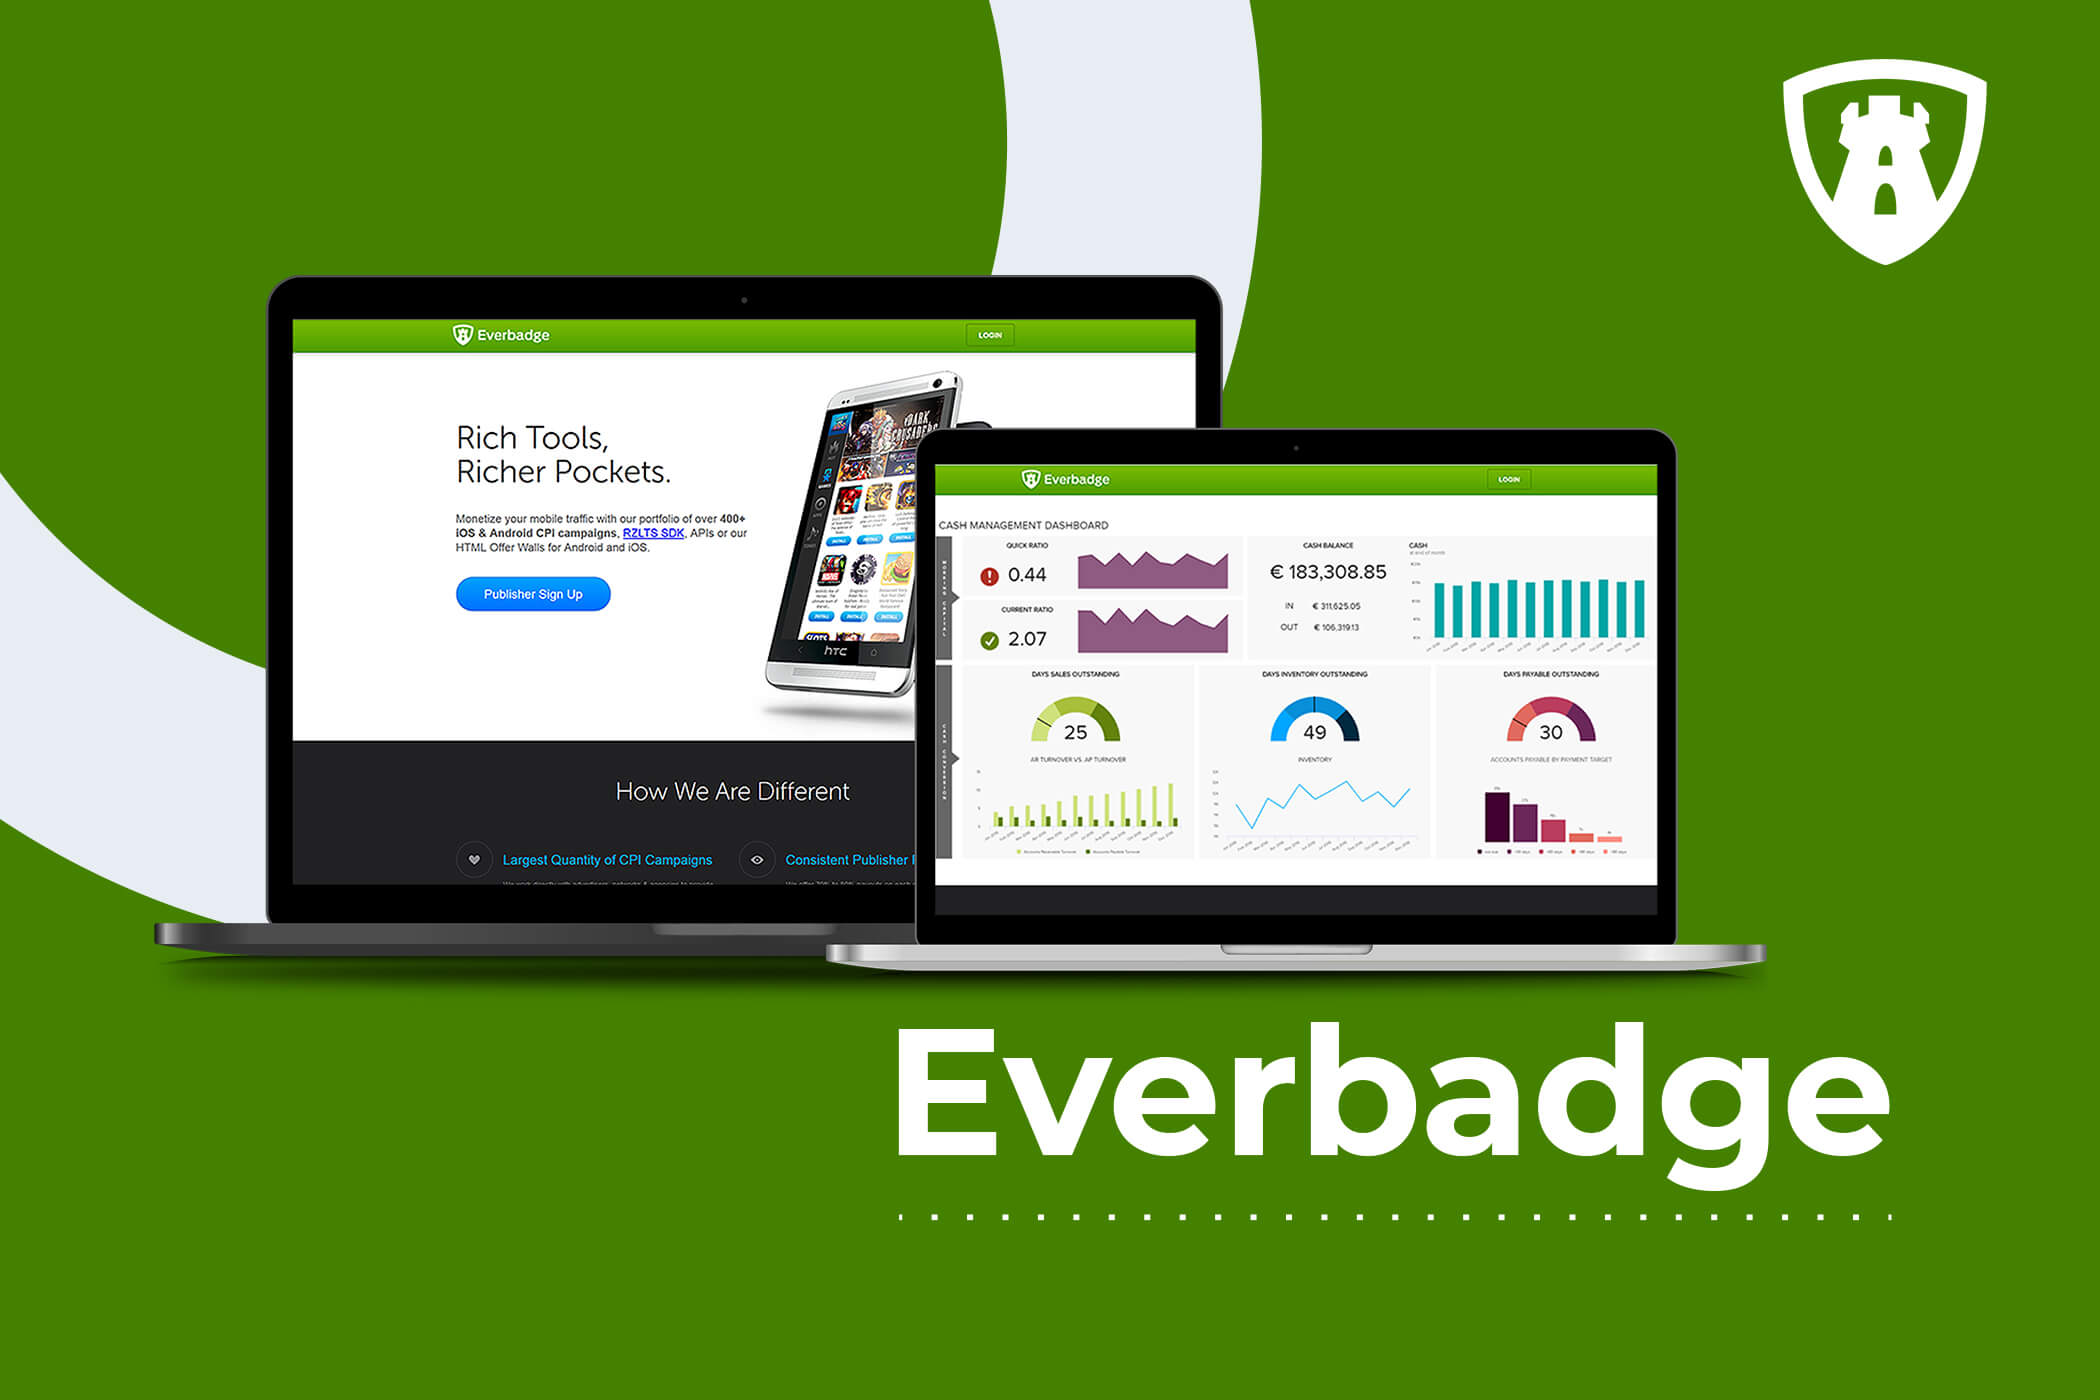 Everbadge (Mobile Ad Platform)